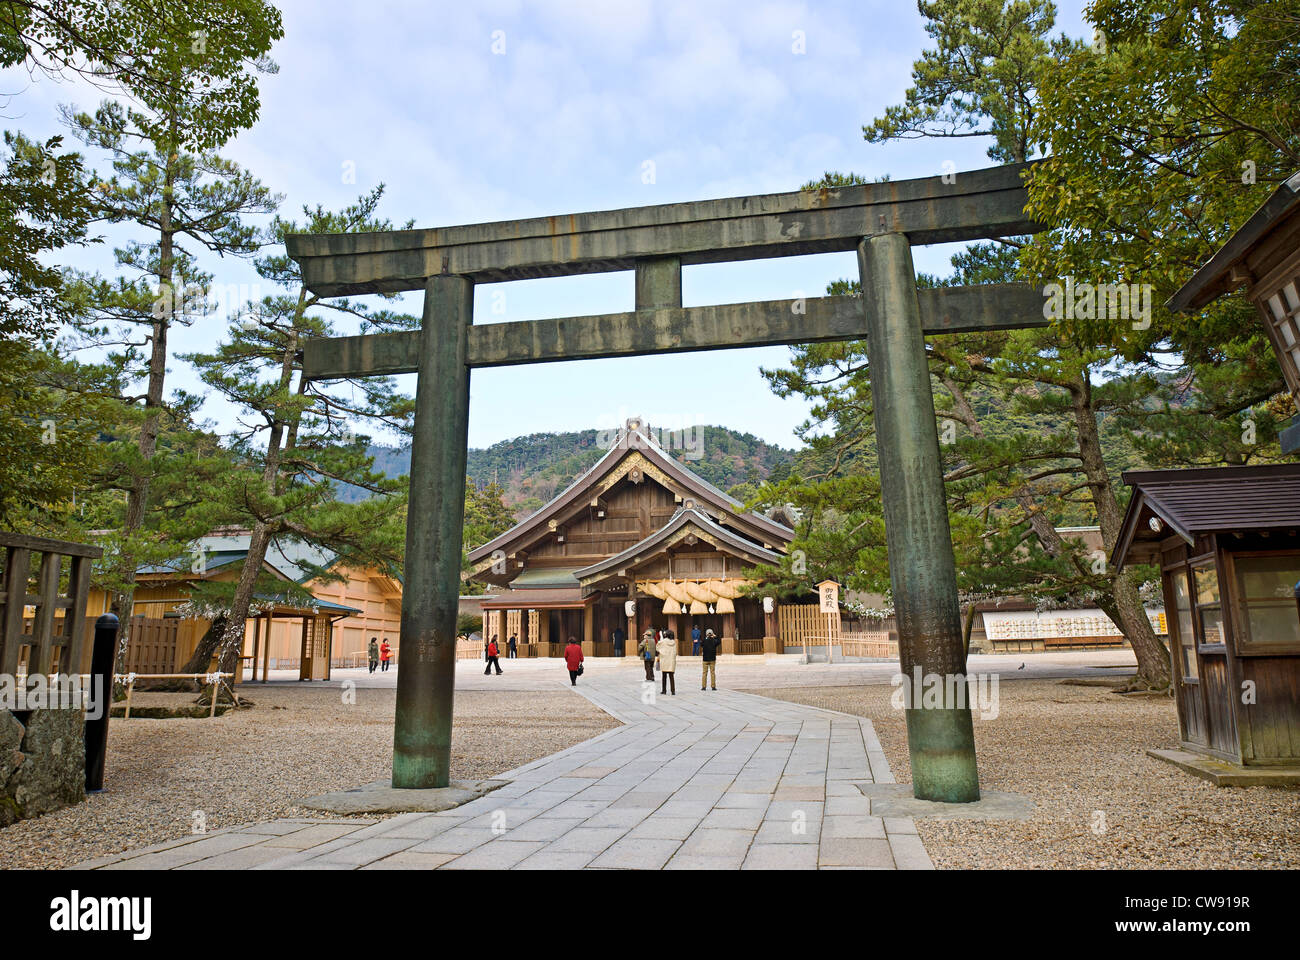 https://c8.alamy.com/comp/CW919R/izumo-taisha-izumo-shrine-shinto-shrine-in-shimane-prefecture-japan-CW919R.jpg